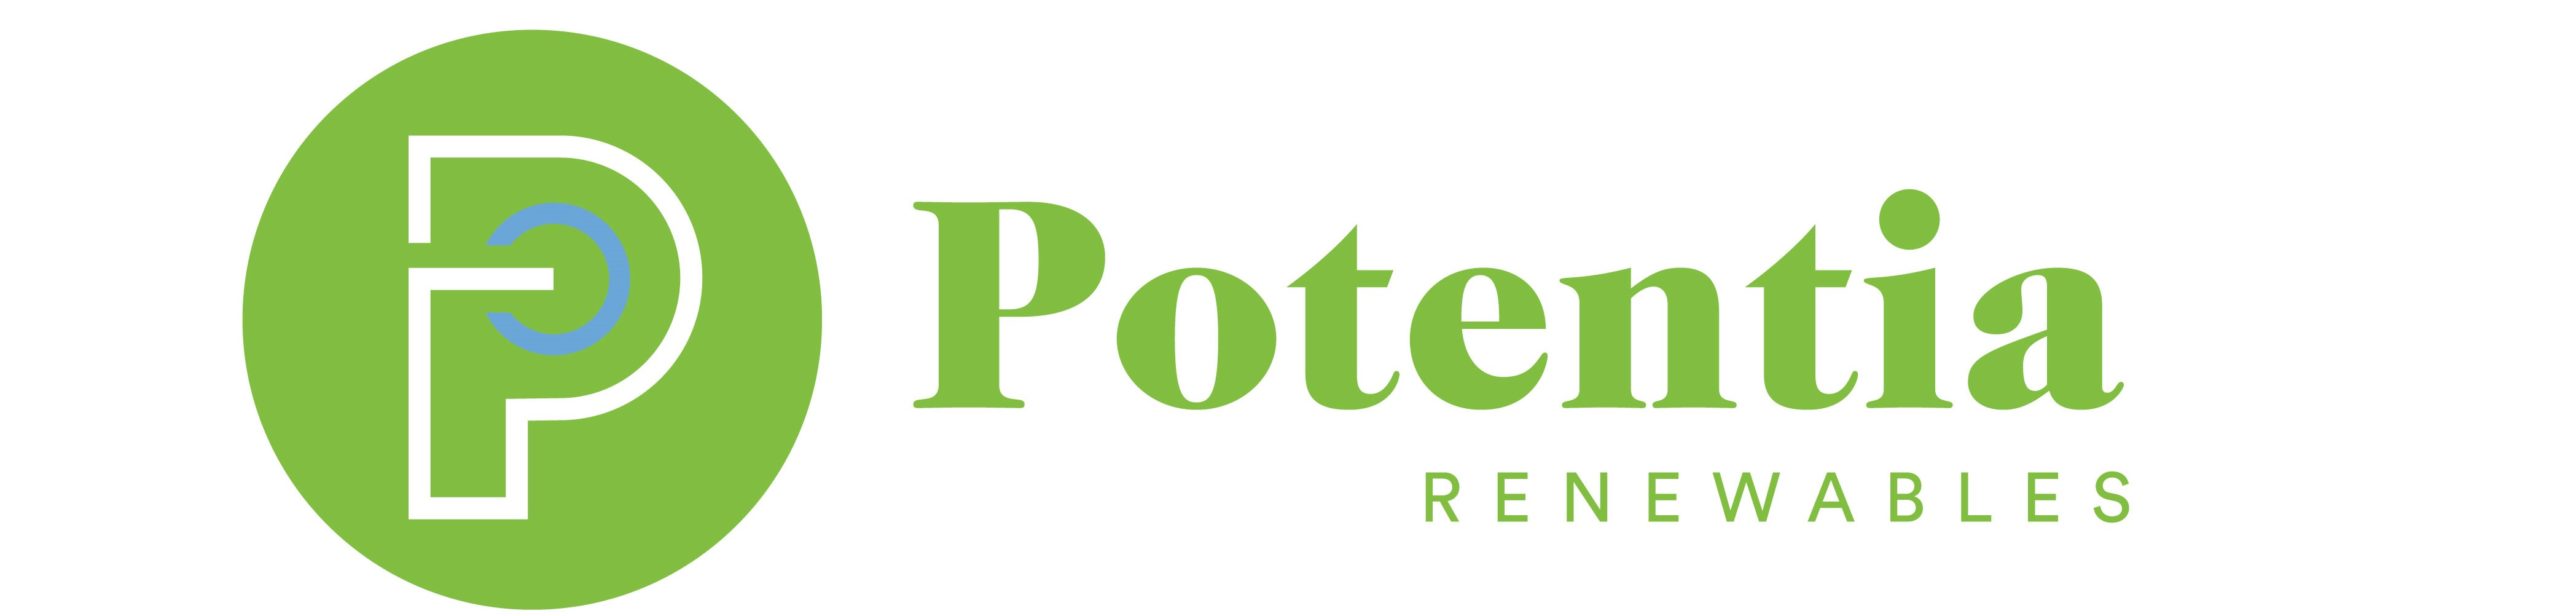 Potentia Renewables Logo